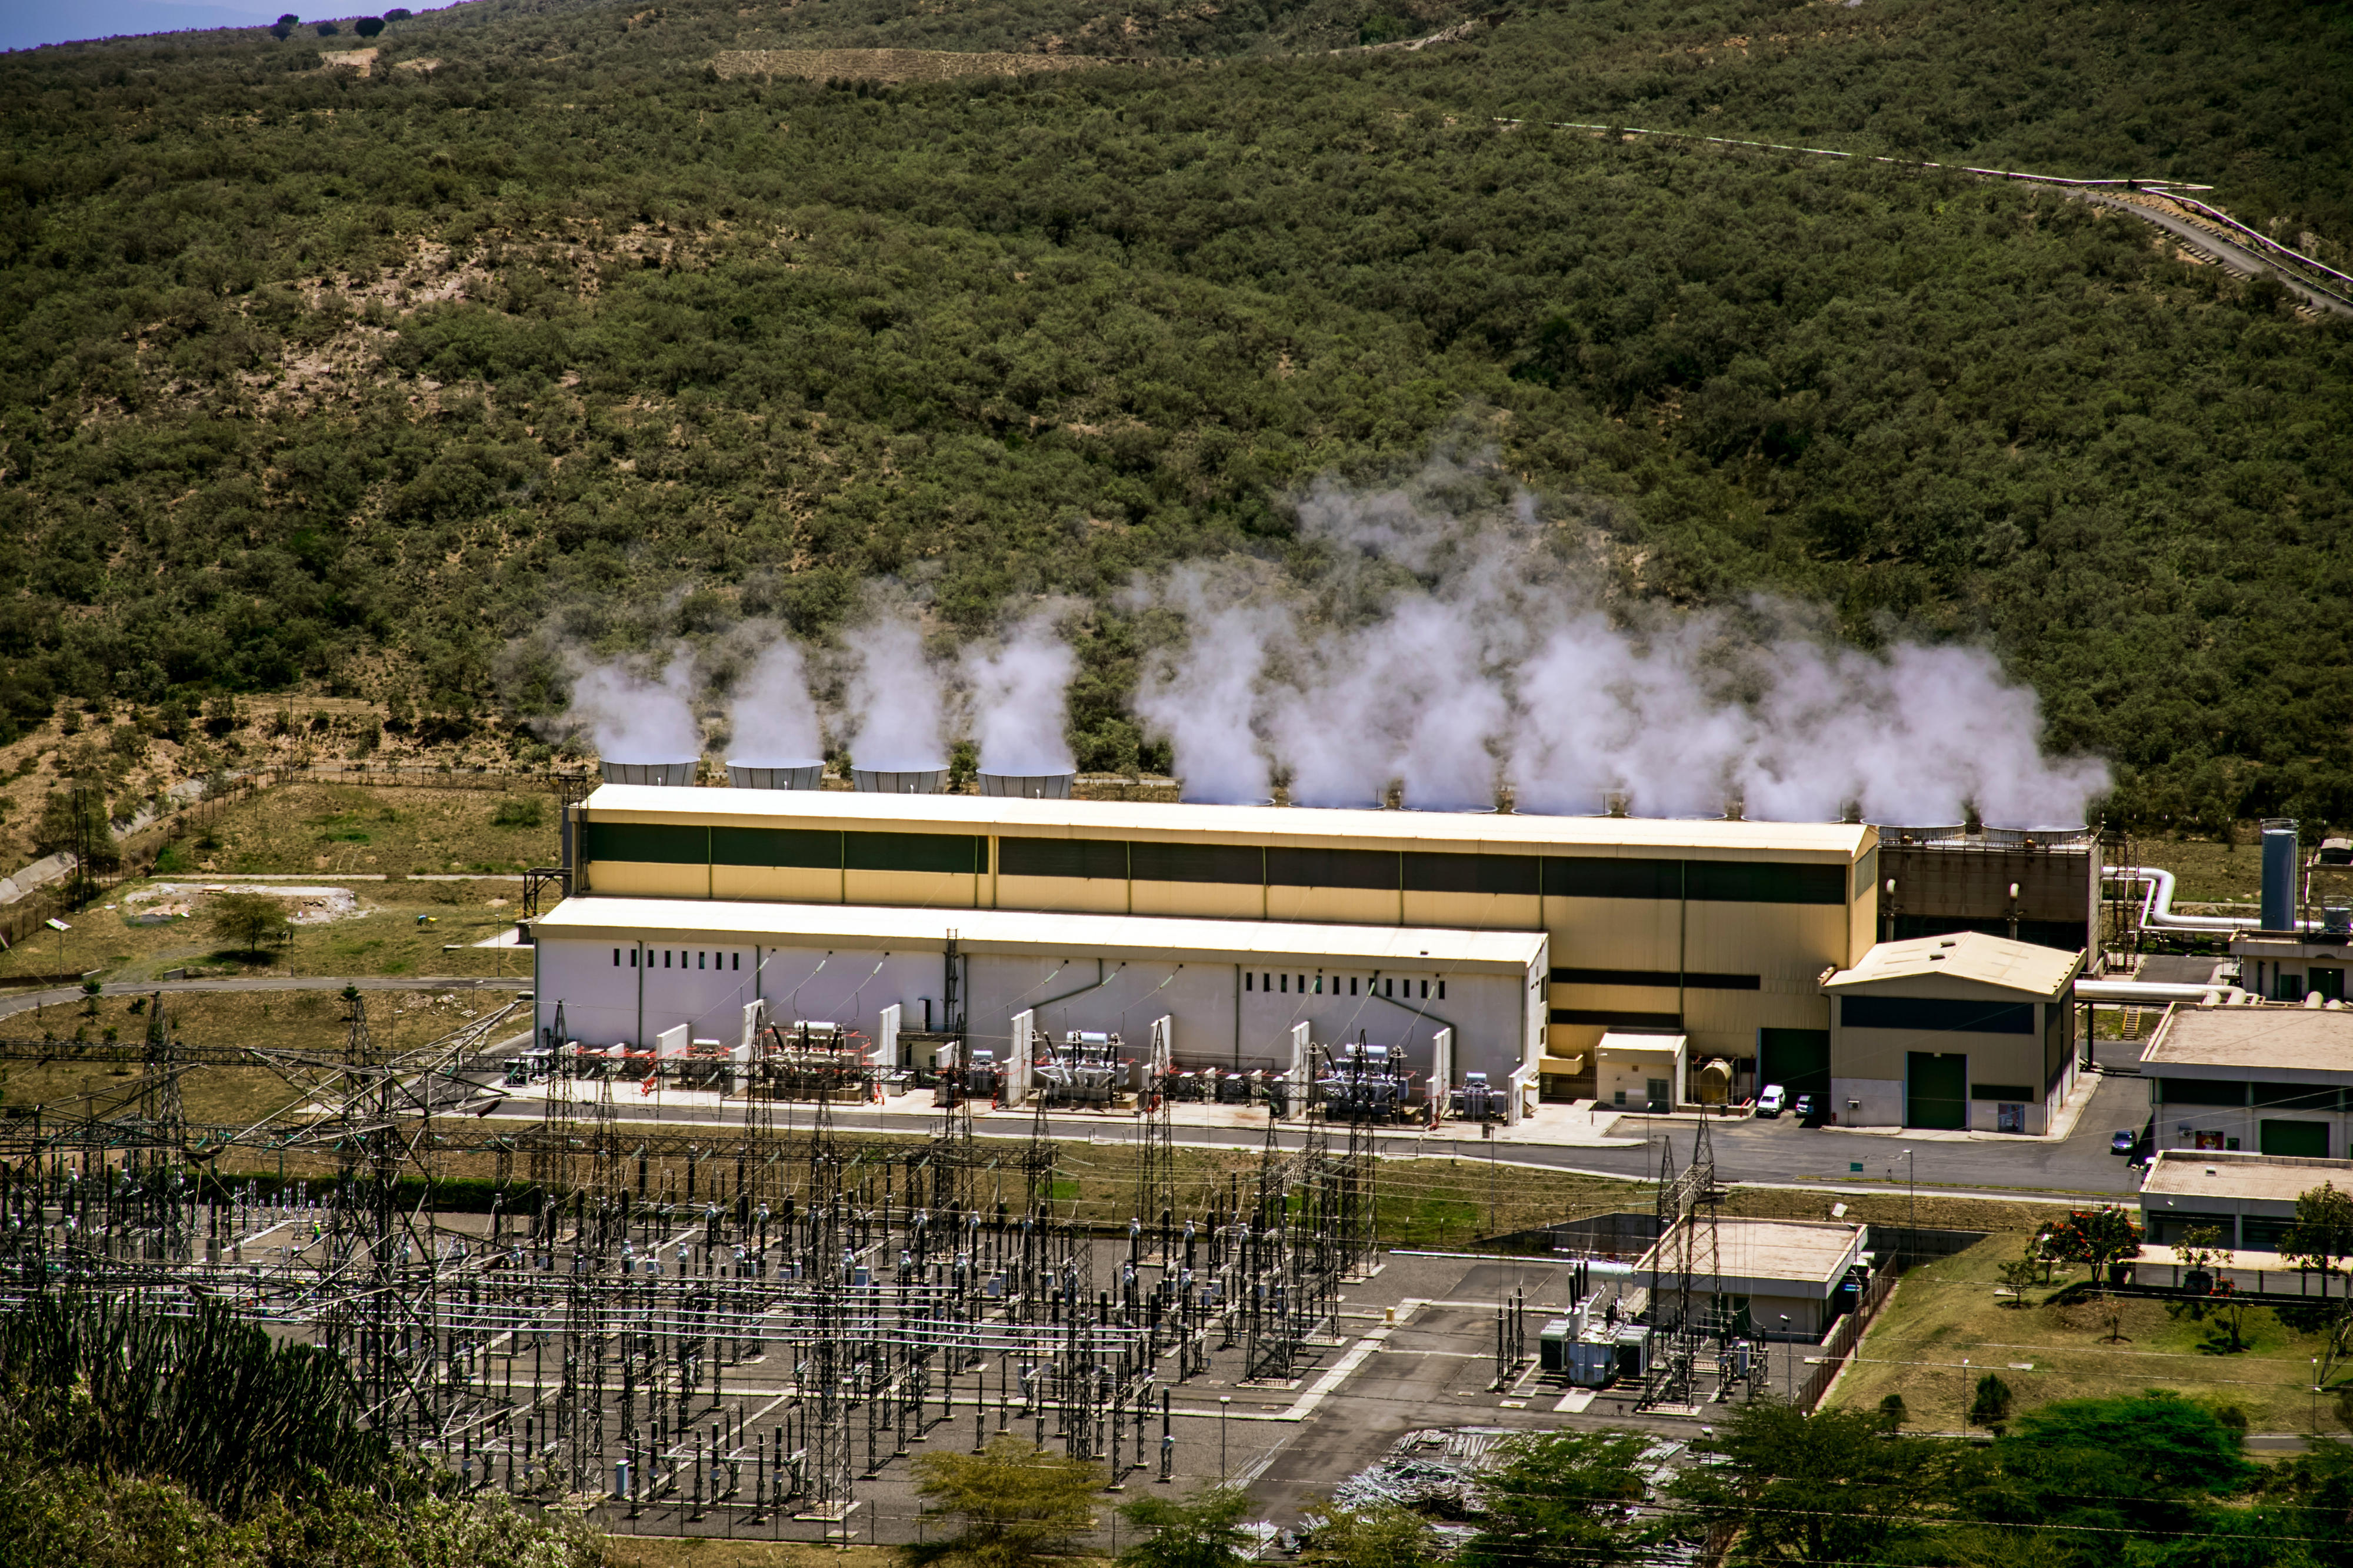 Overview of the geothermal power plant Olkaria, Kenya